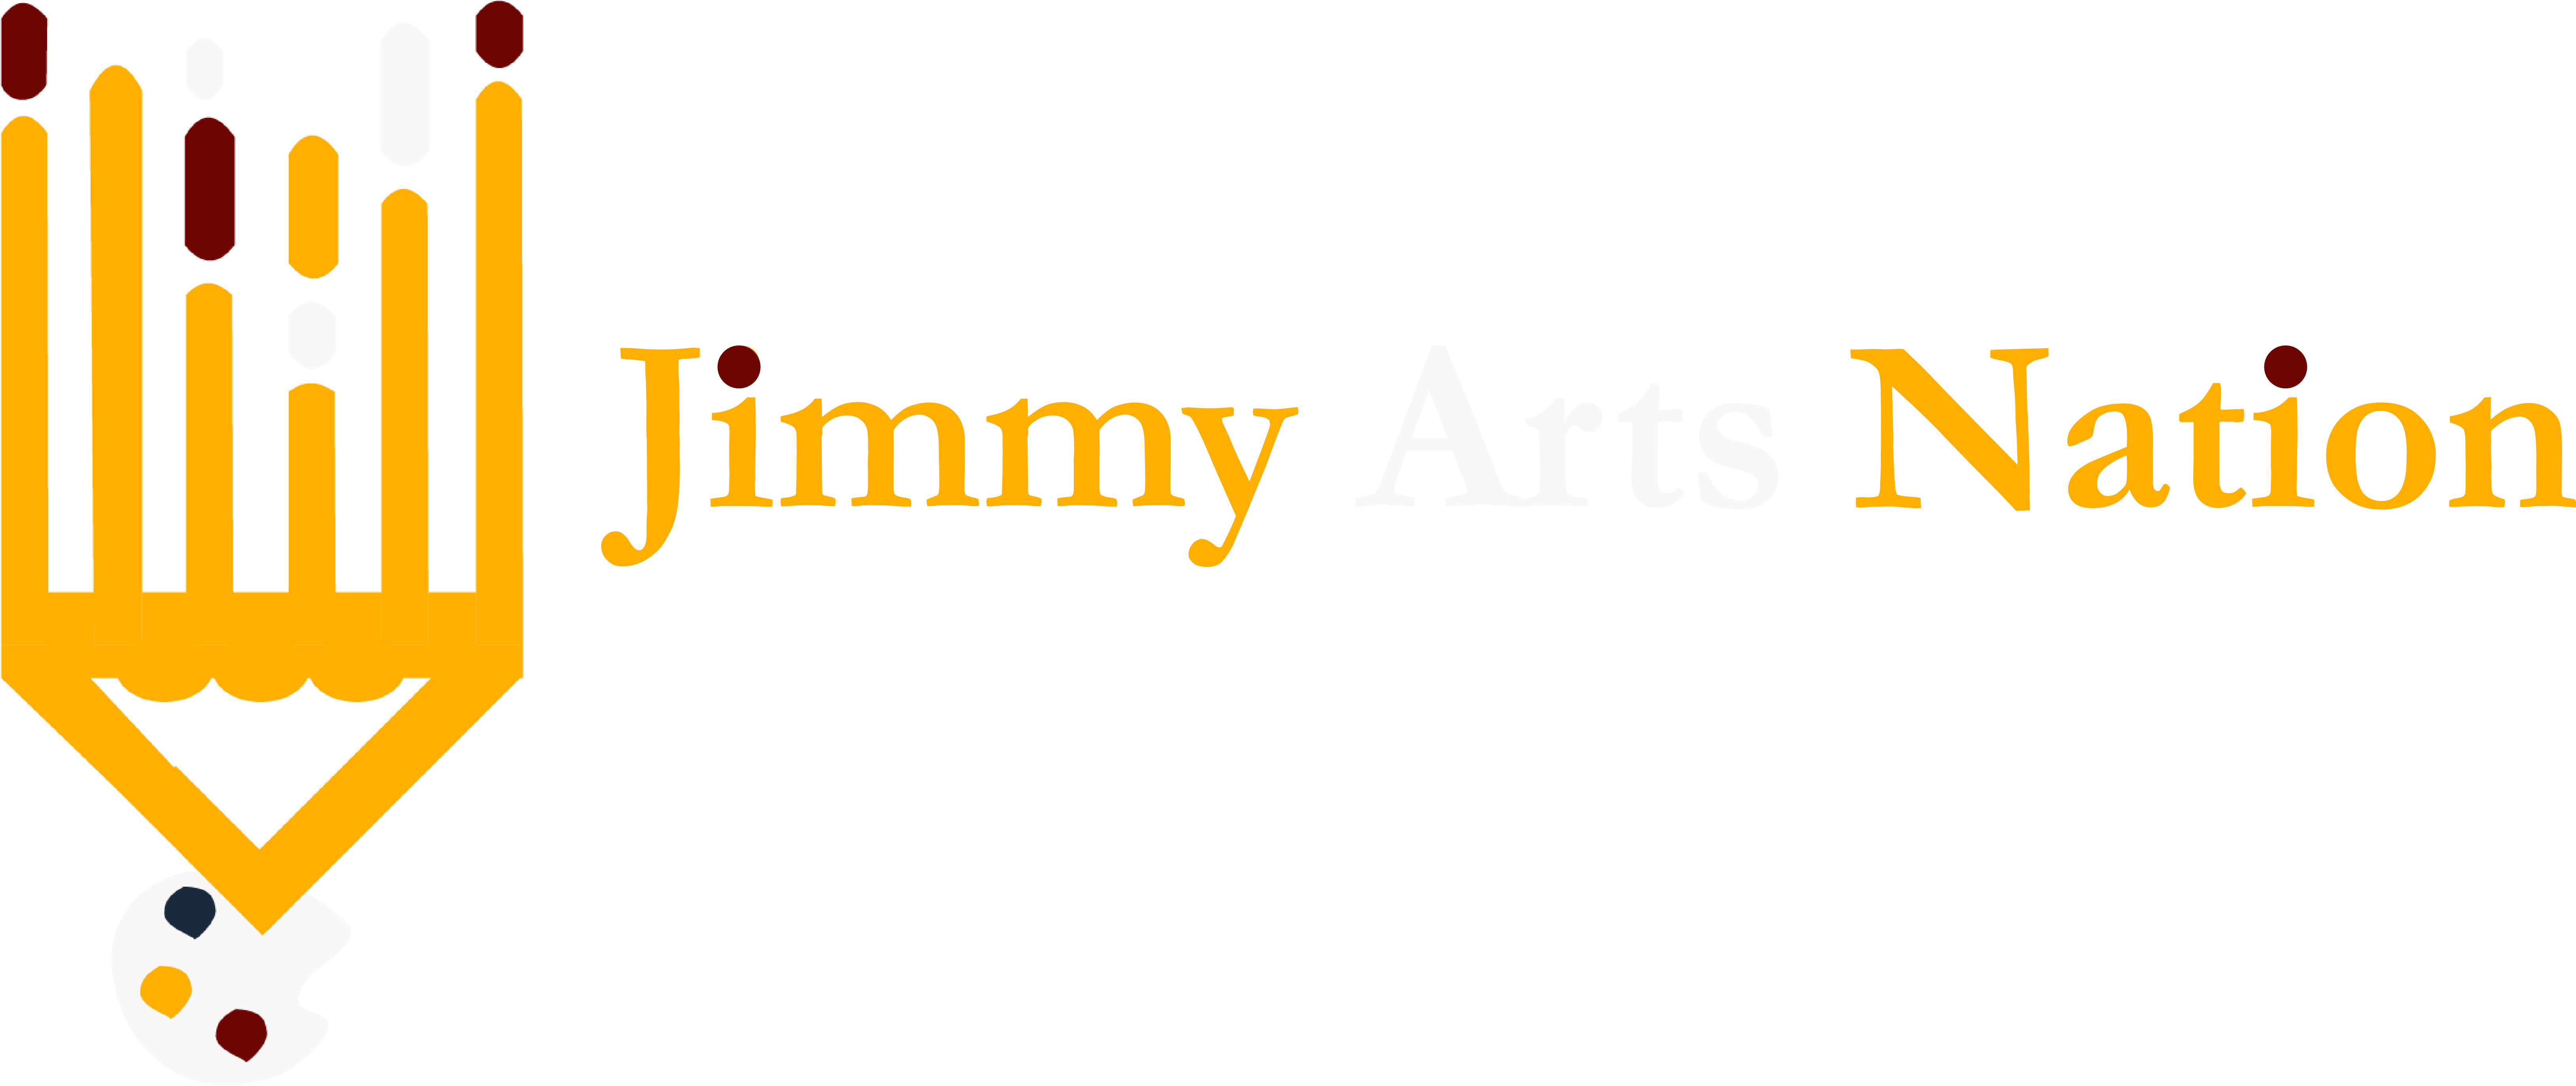 Affordable Art Dubai /Jimmy Arts Nation